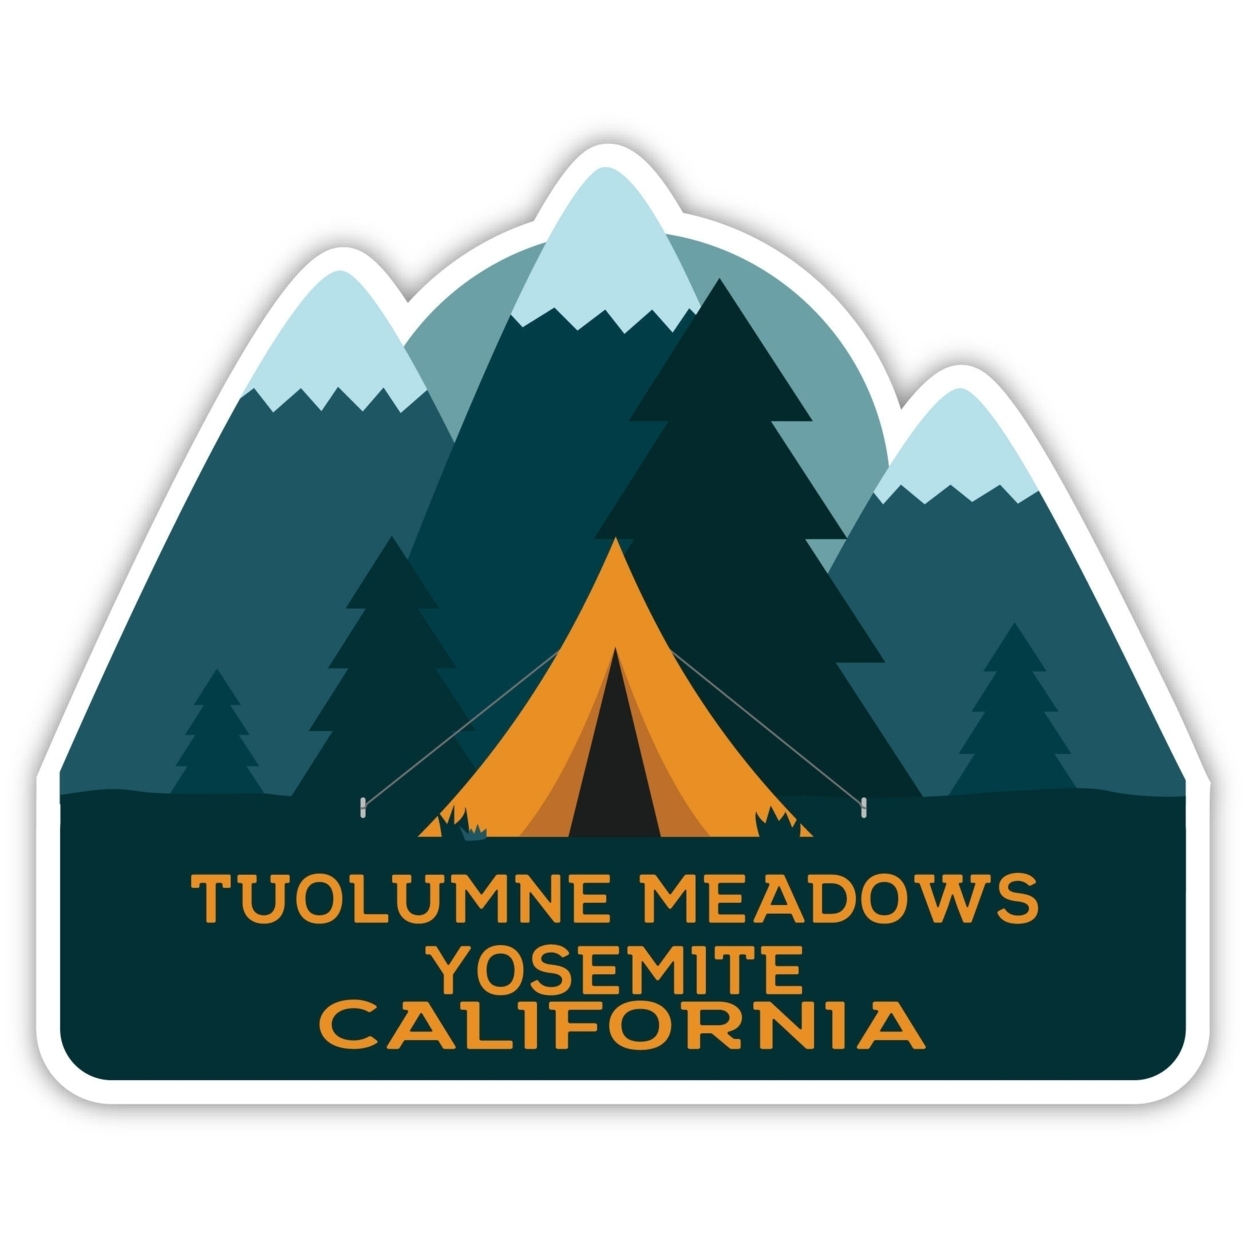 Tuolumne Meadows Yosemite California Souvenir Decorative Stickers (Choose Theme And Size) - Single Unit, 4-Inch, Camp Life